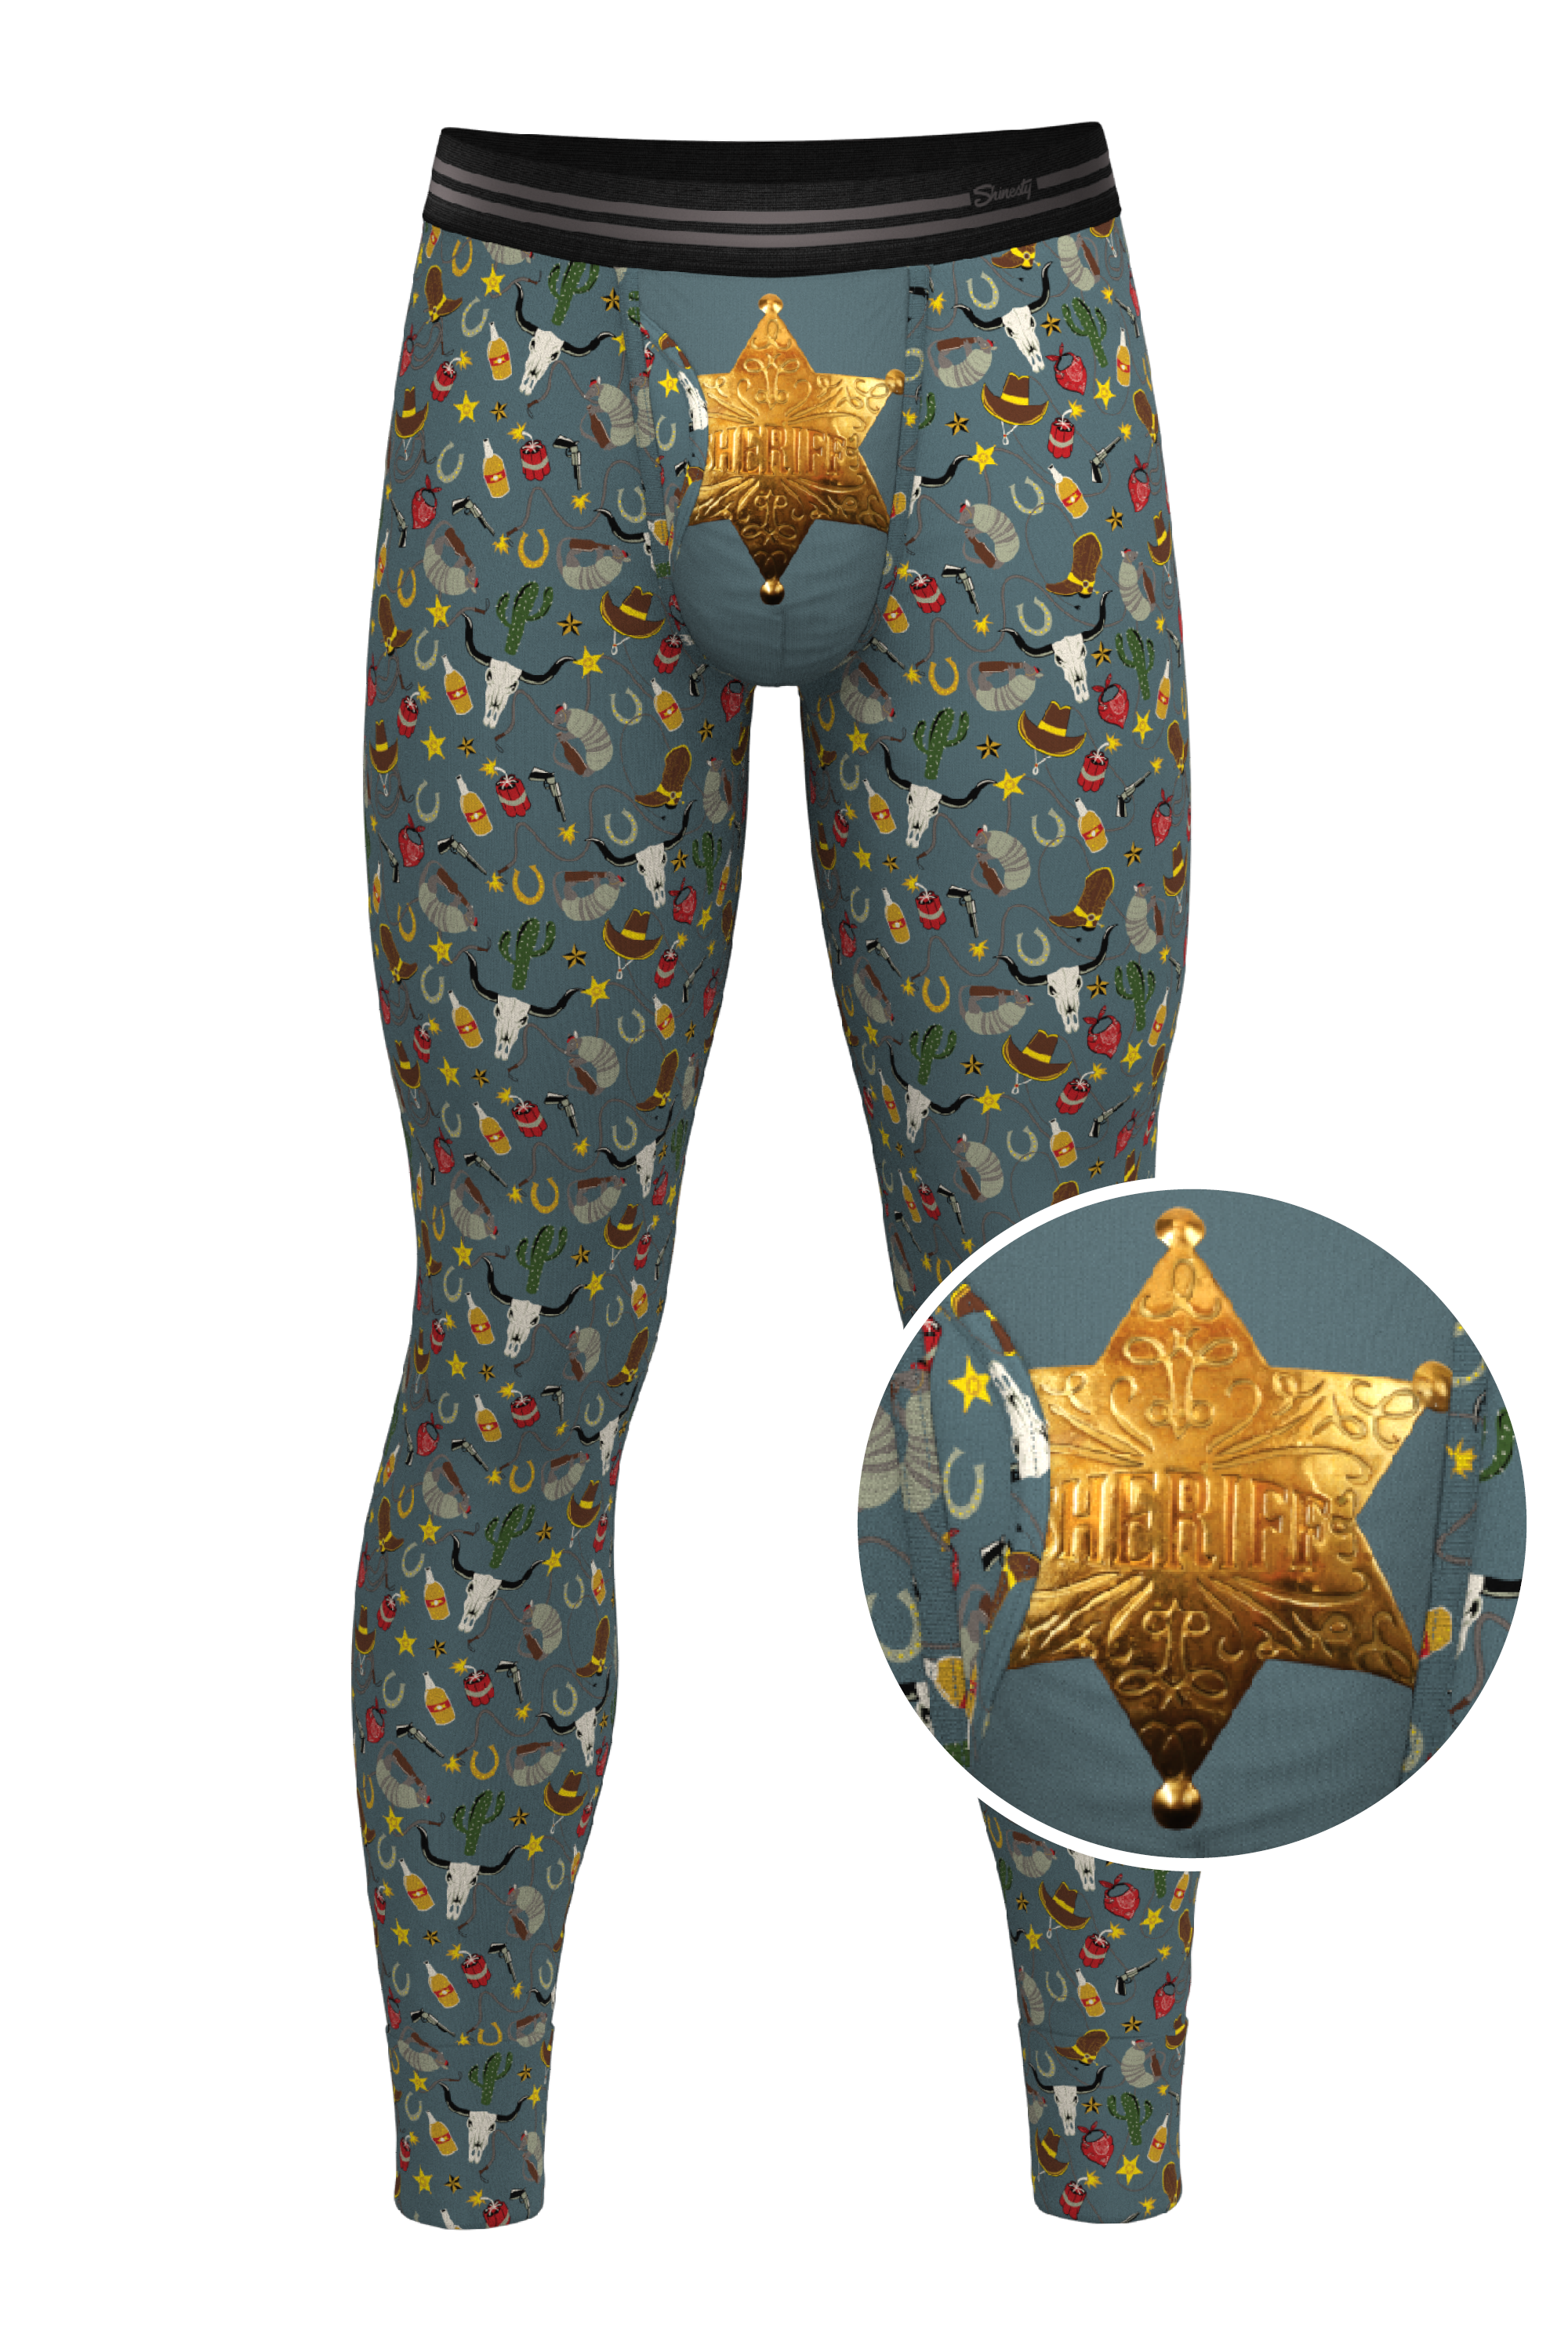 Sheriff Badge Long Underwear